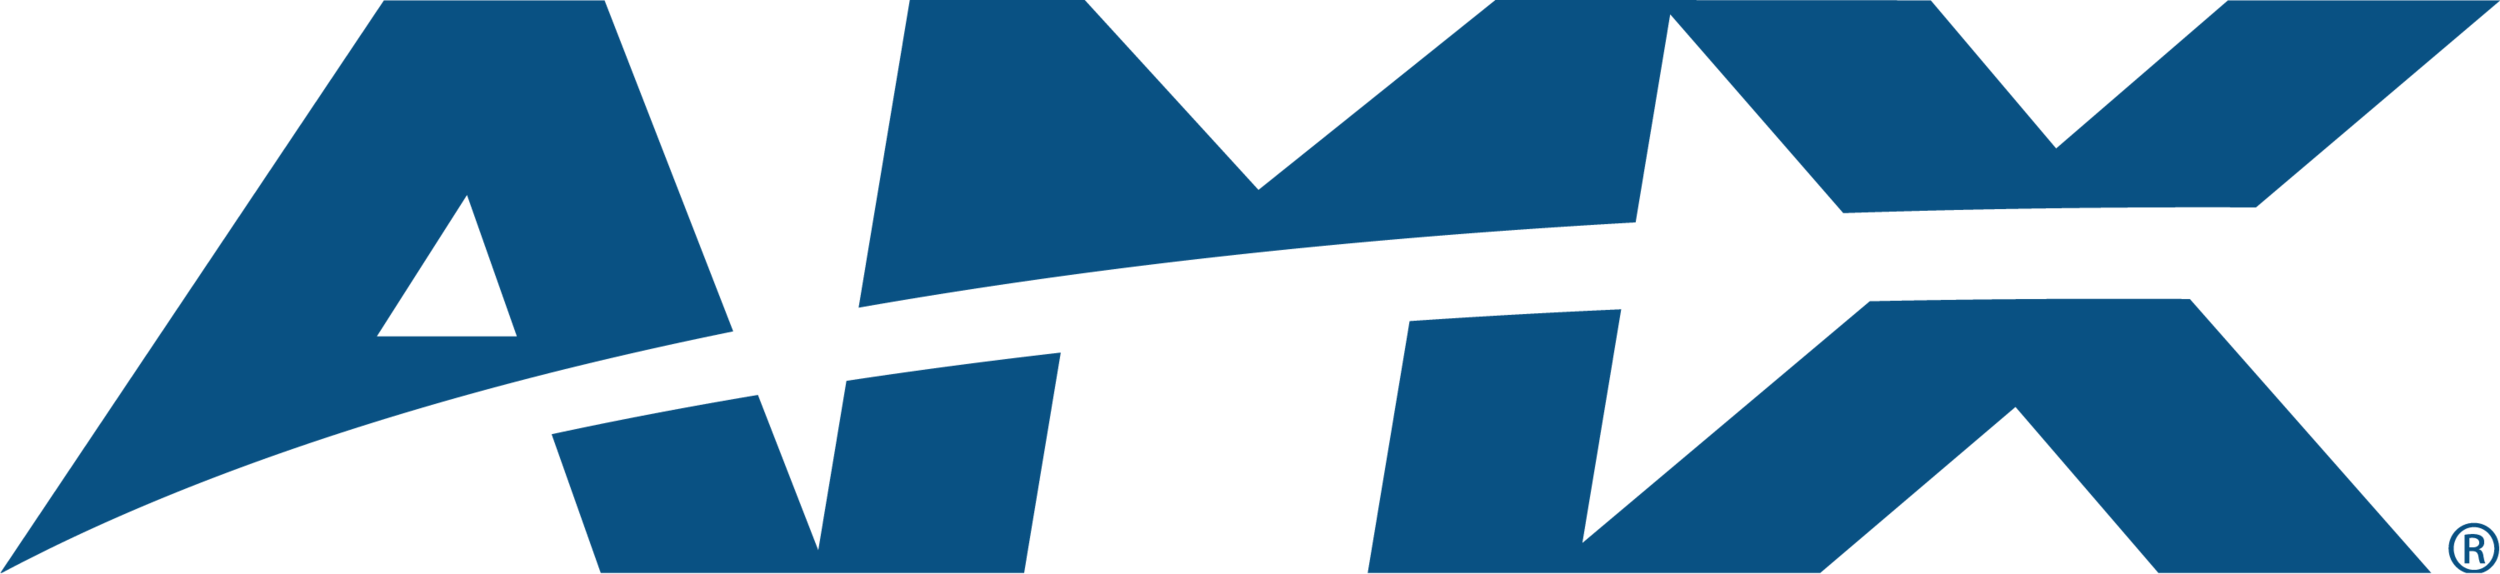 amx-logo.png